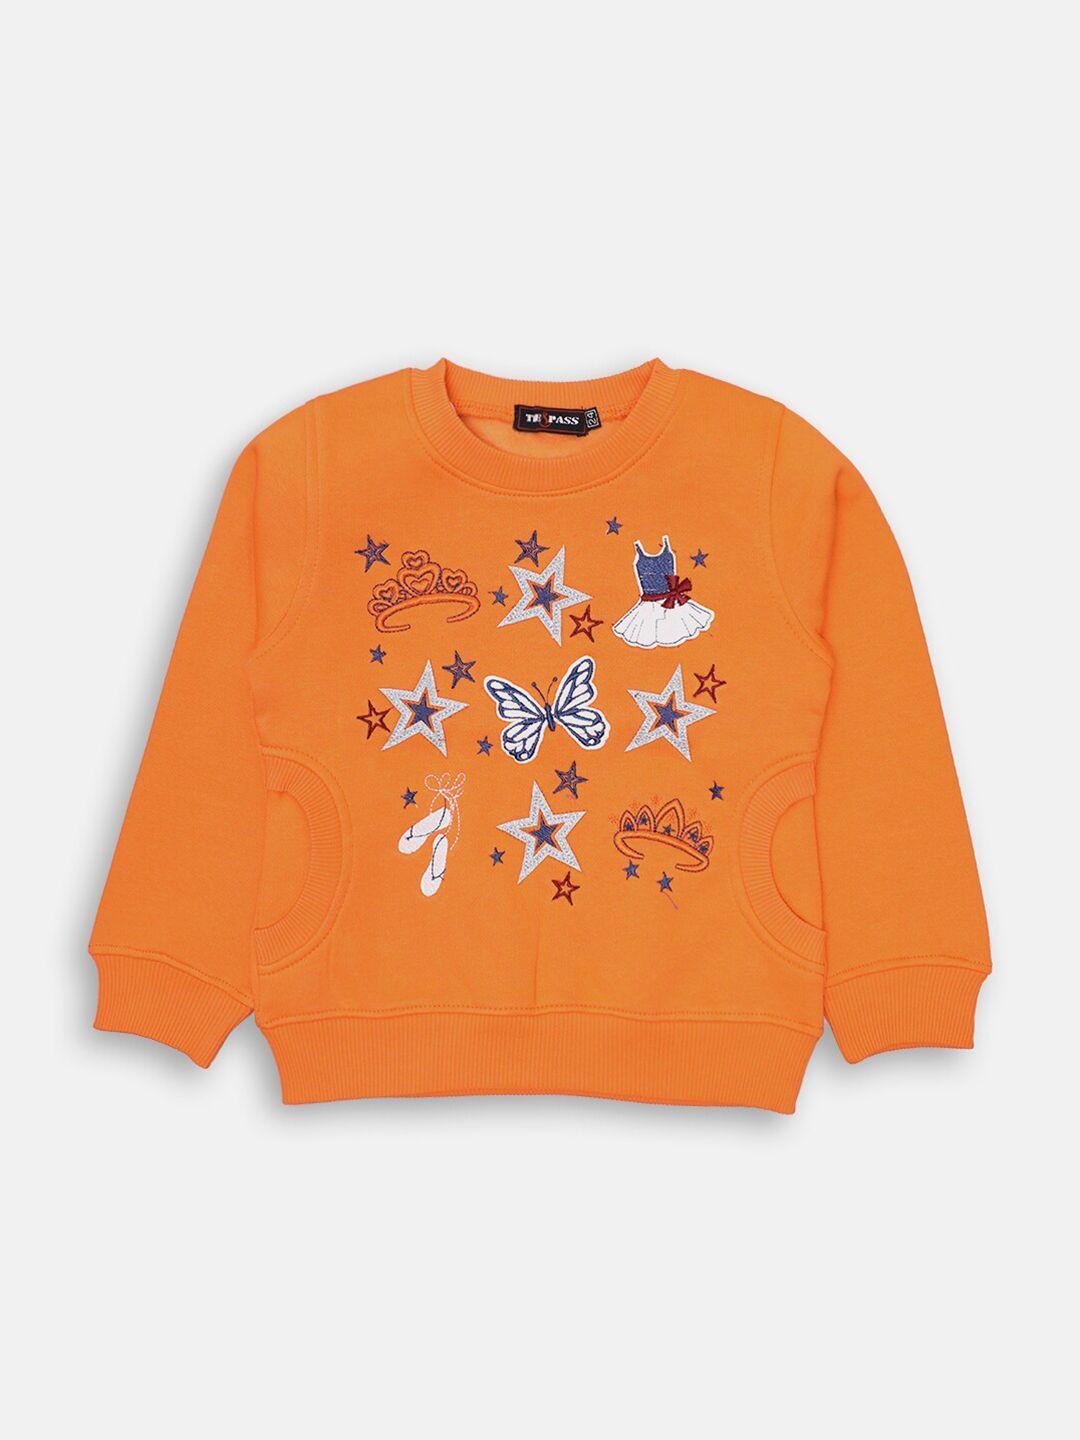 tre&pass-boys-orange-printed-cotton-sweatshirt